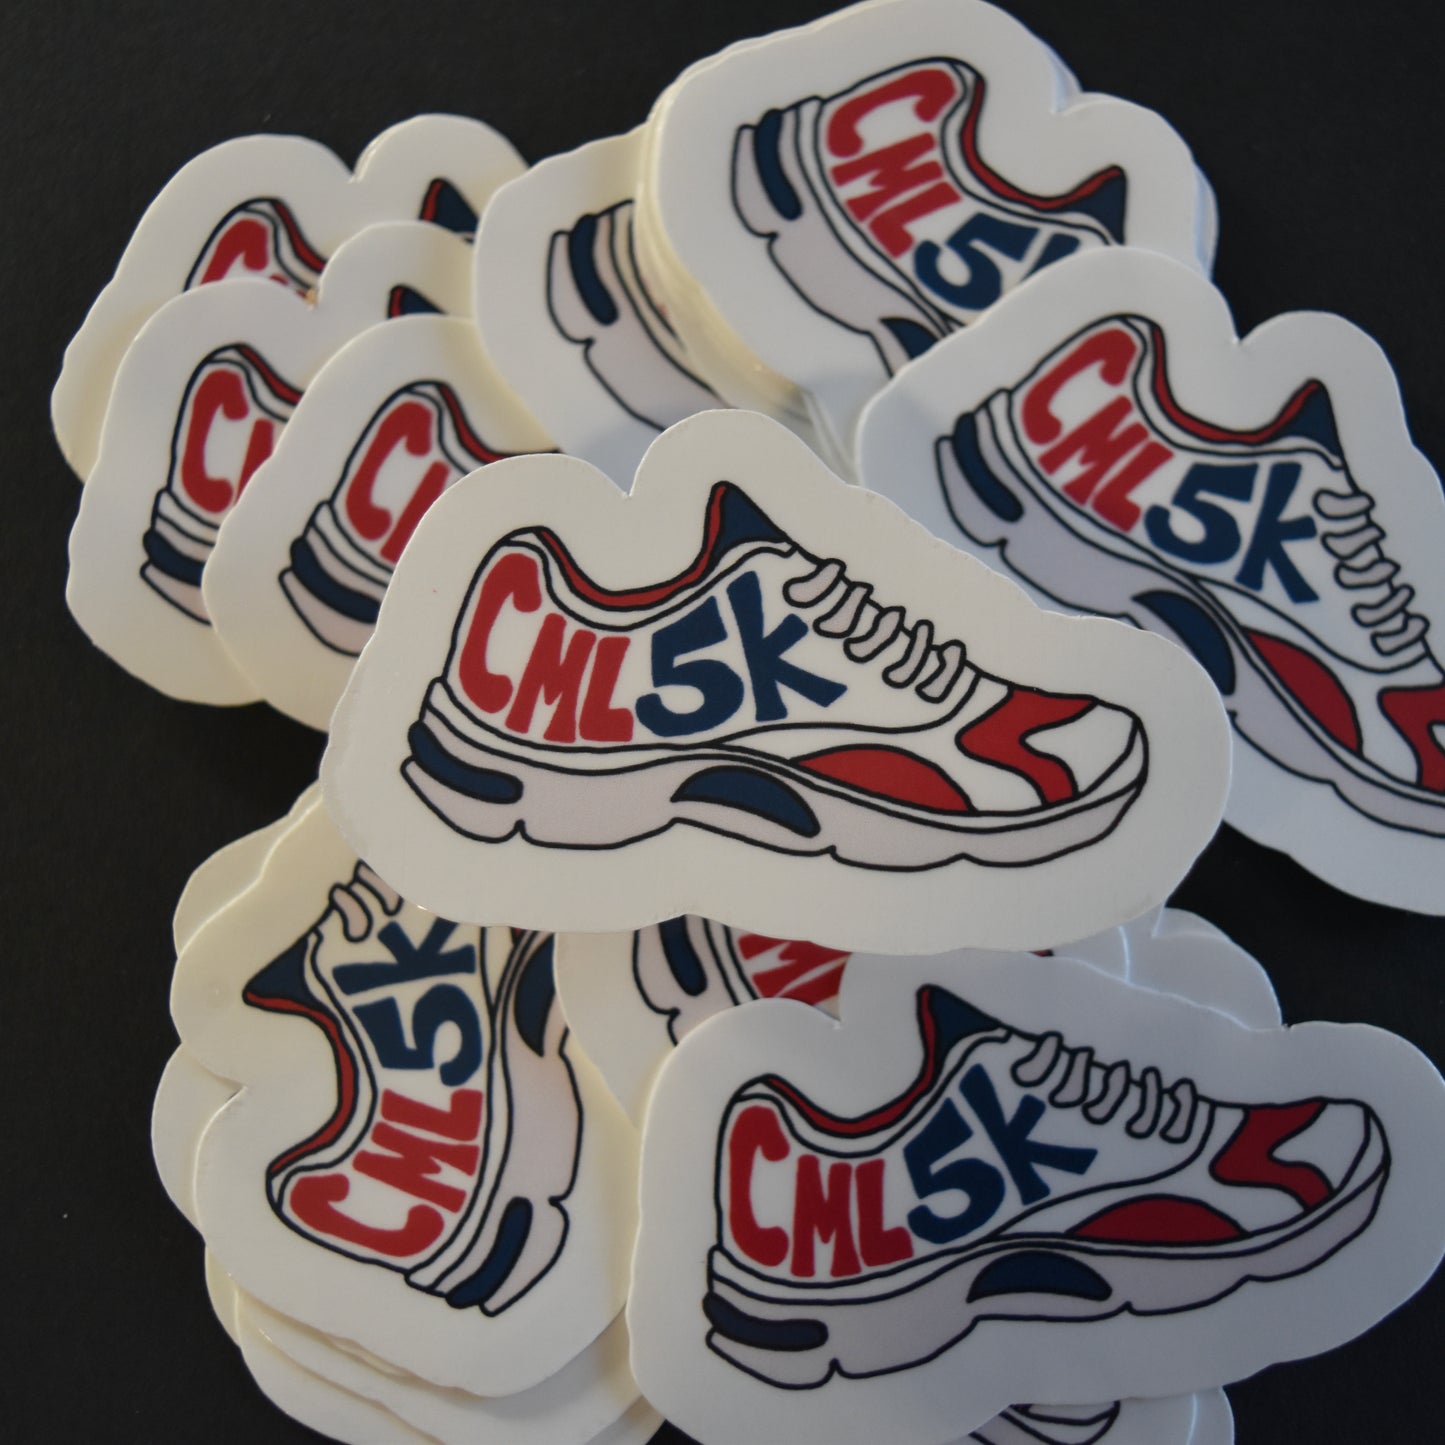 Carmel 5K Running Shoe Sticker